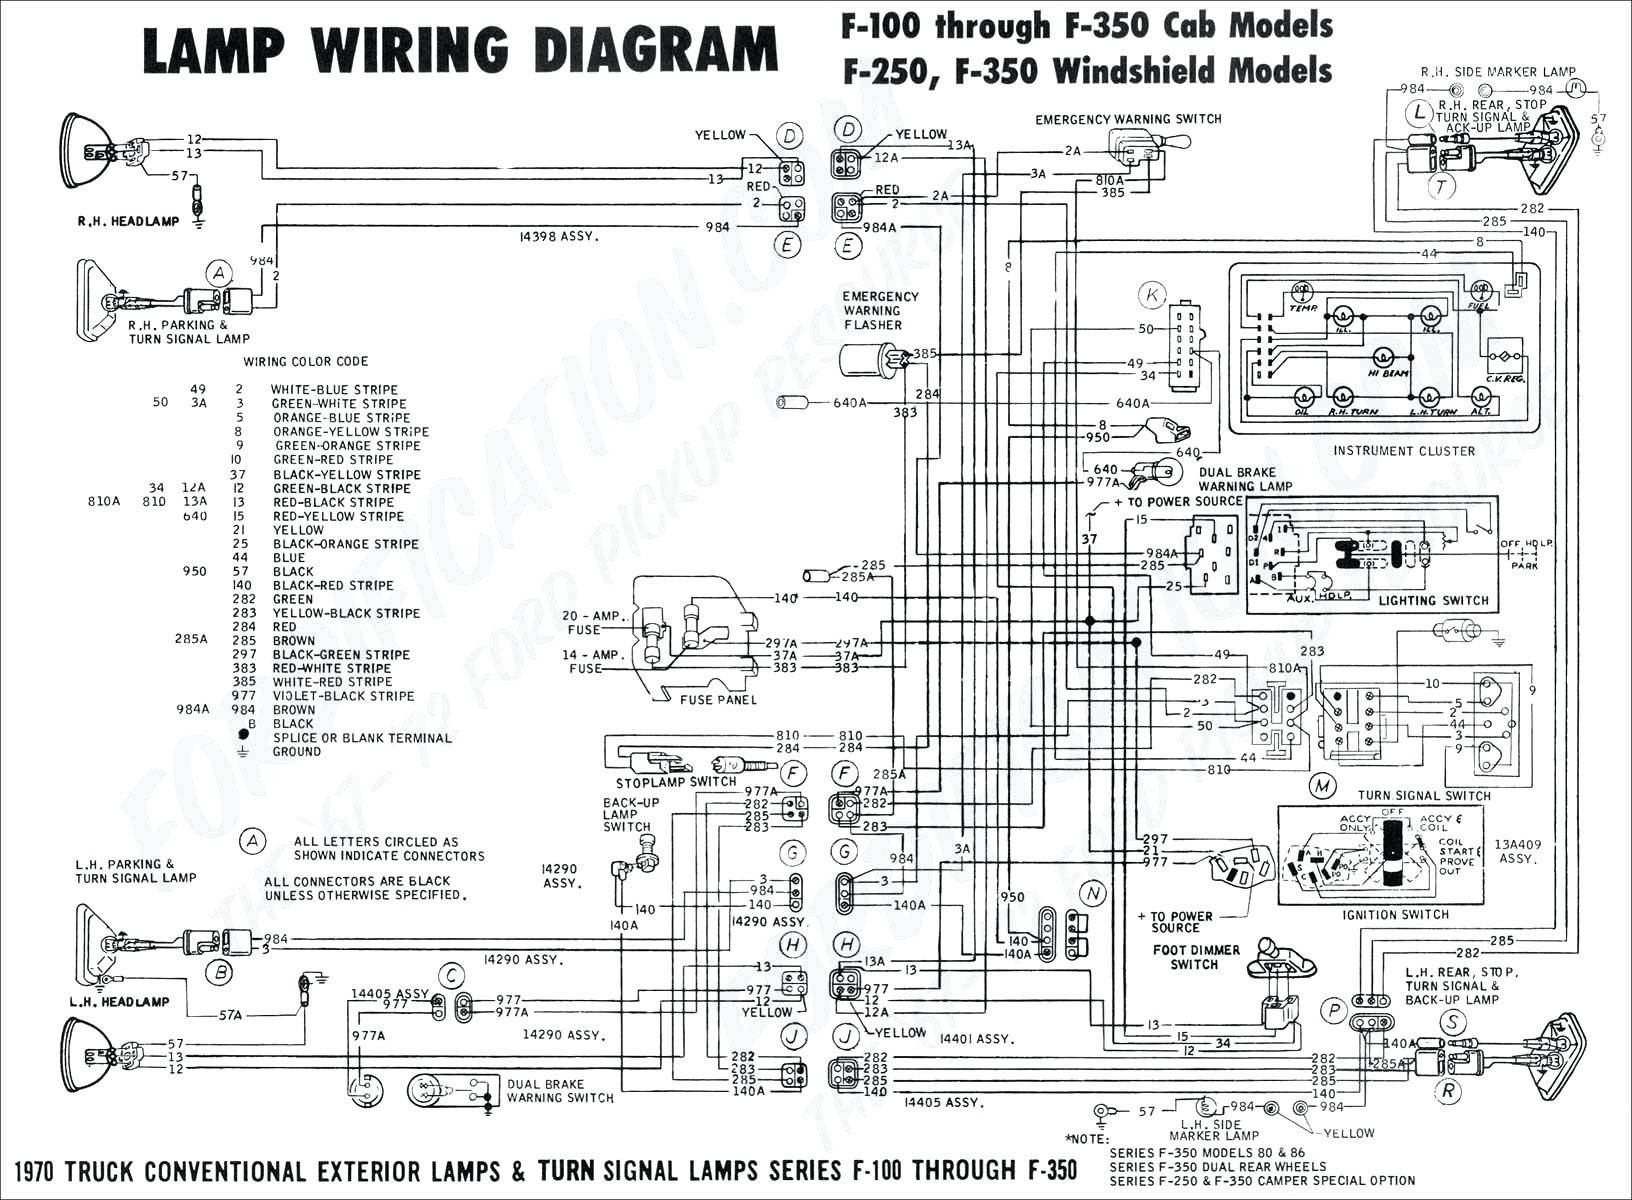 Semi Trailer Light Wiring Diagram Beautiful Wiring Diagram Semi Trailer Plug Best New Wiring Diagram ford